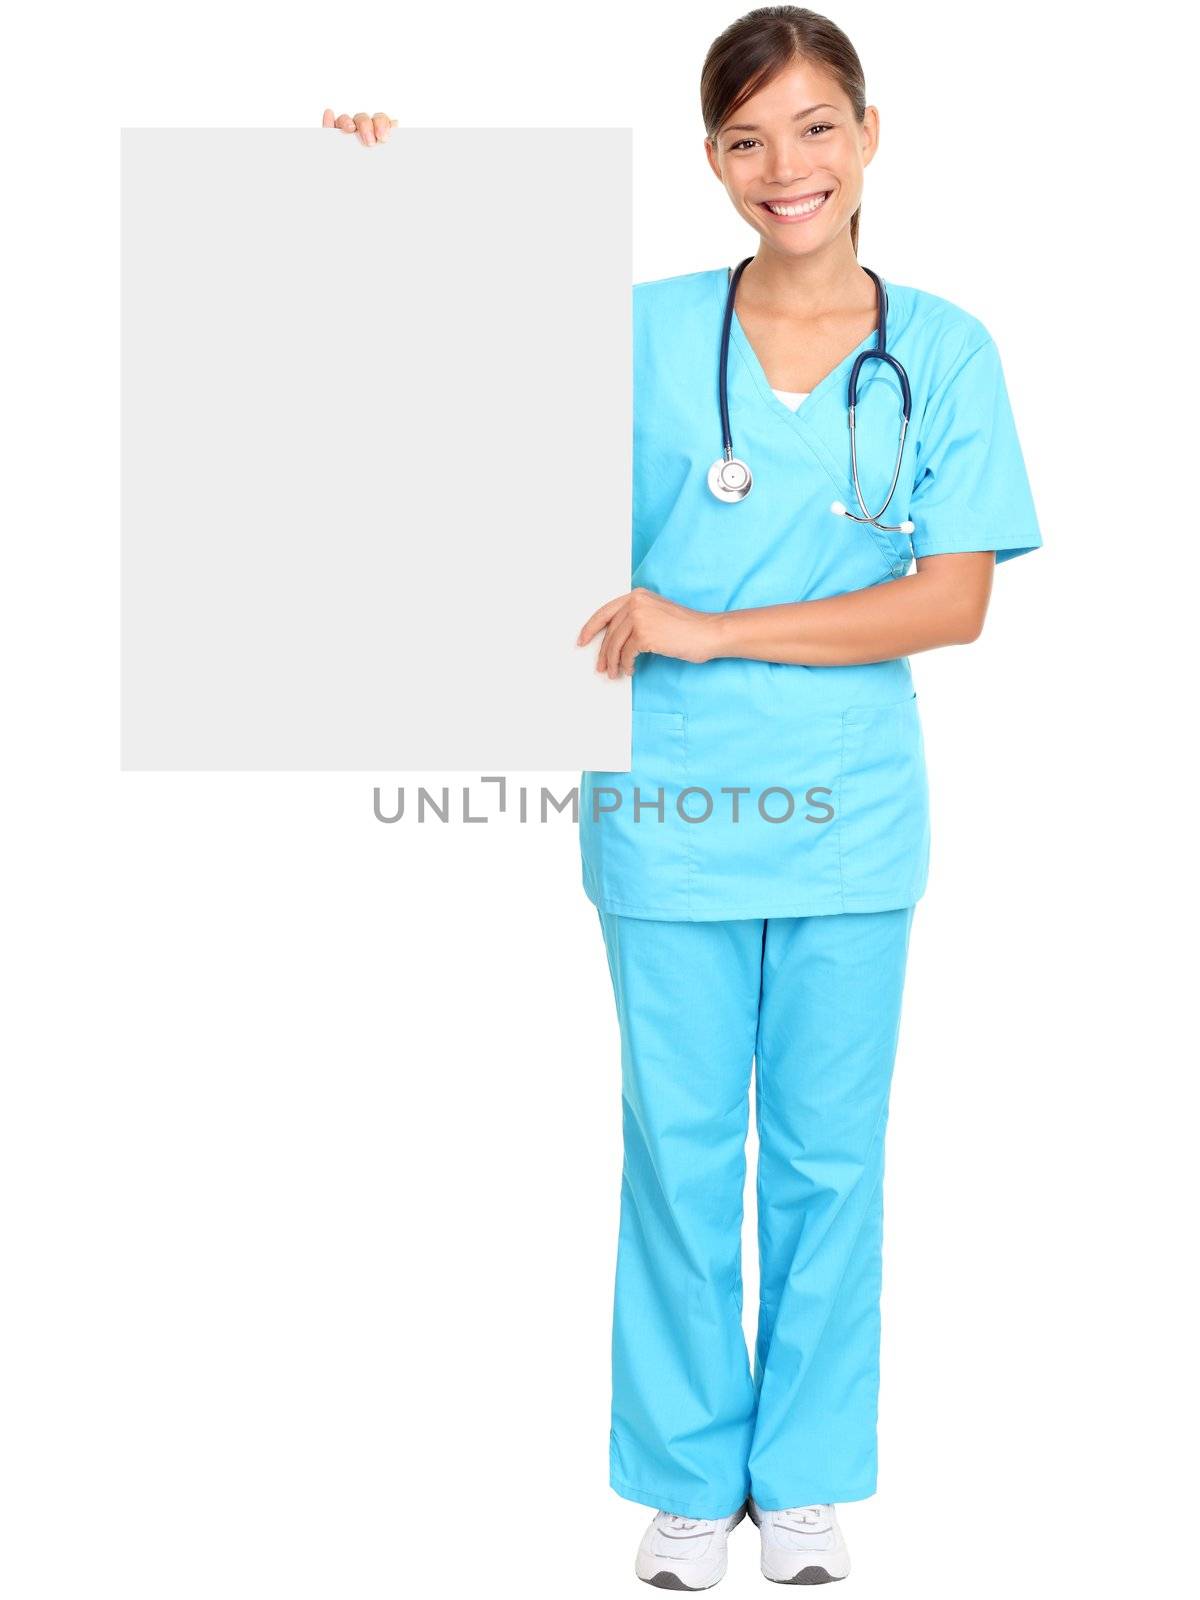 Medical nurse showing blank sign by Maridav